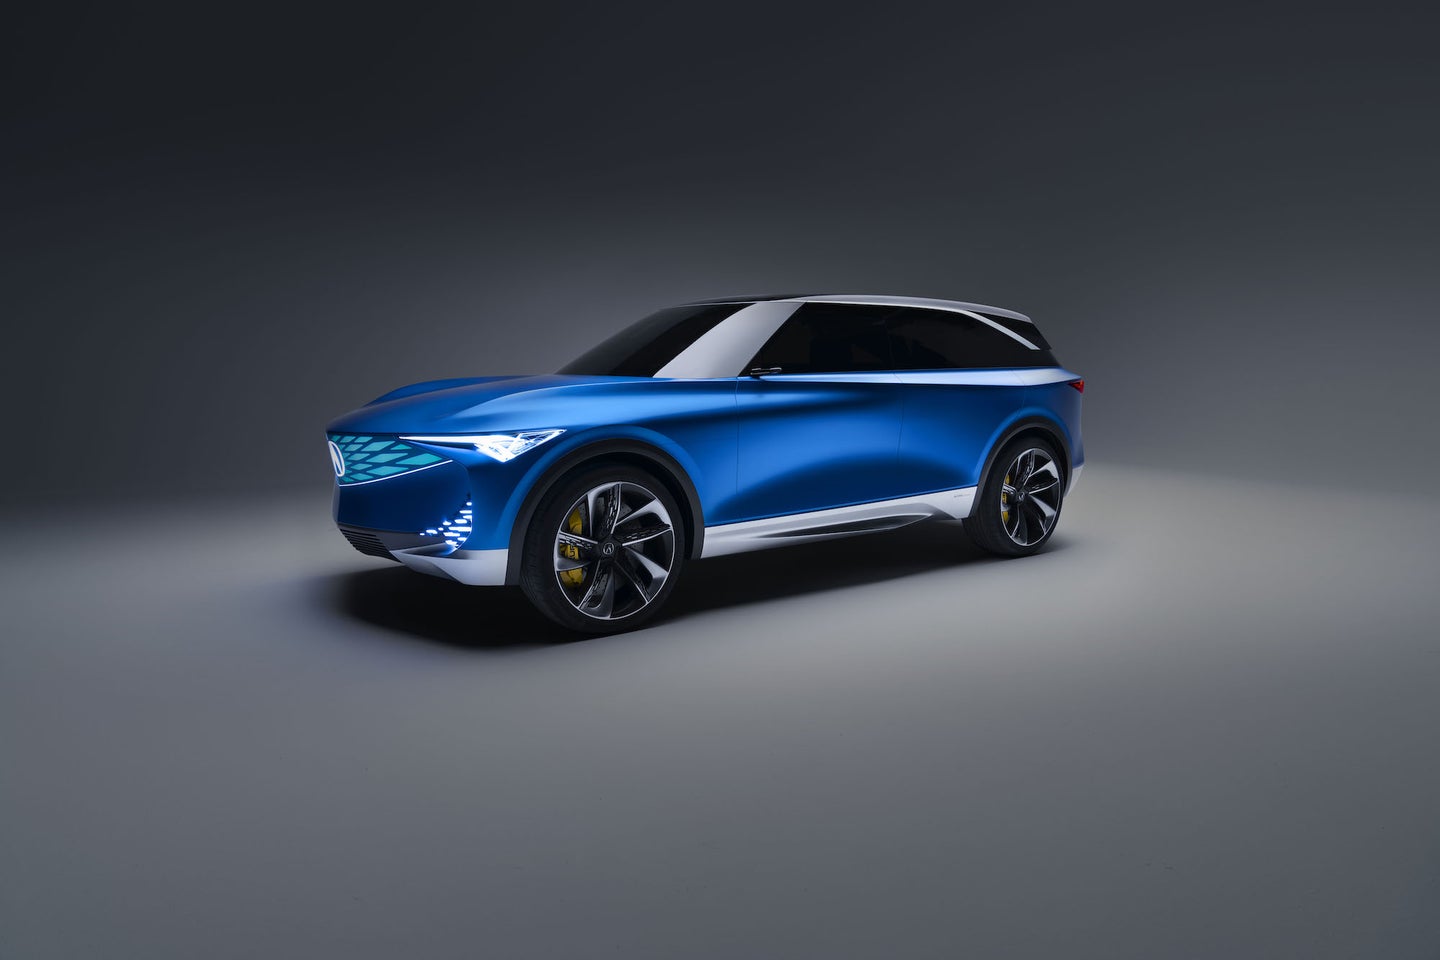 The Precision EV concept hints at the brand's electric future.